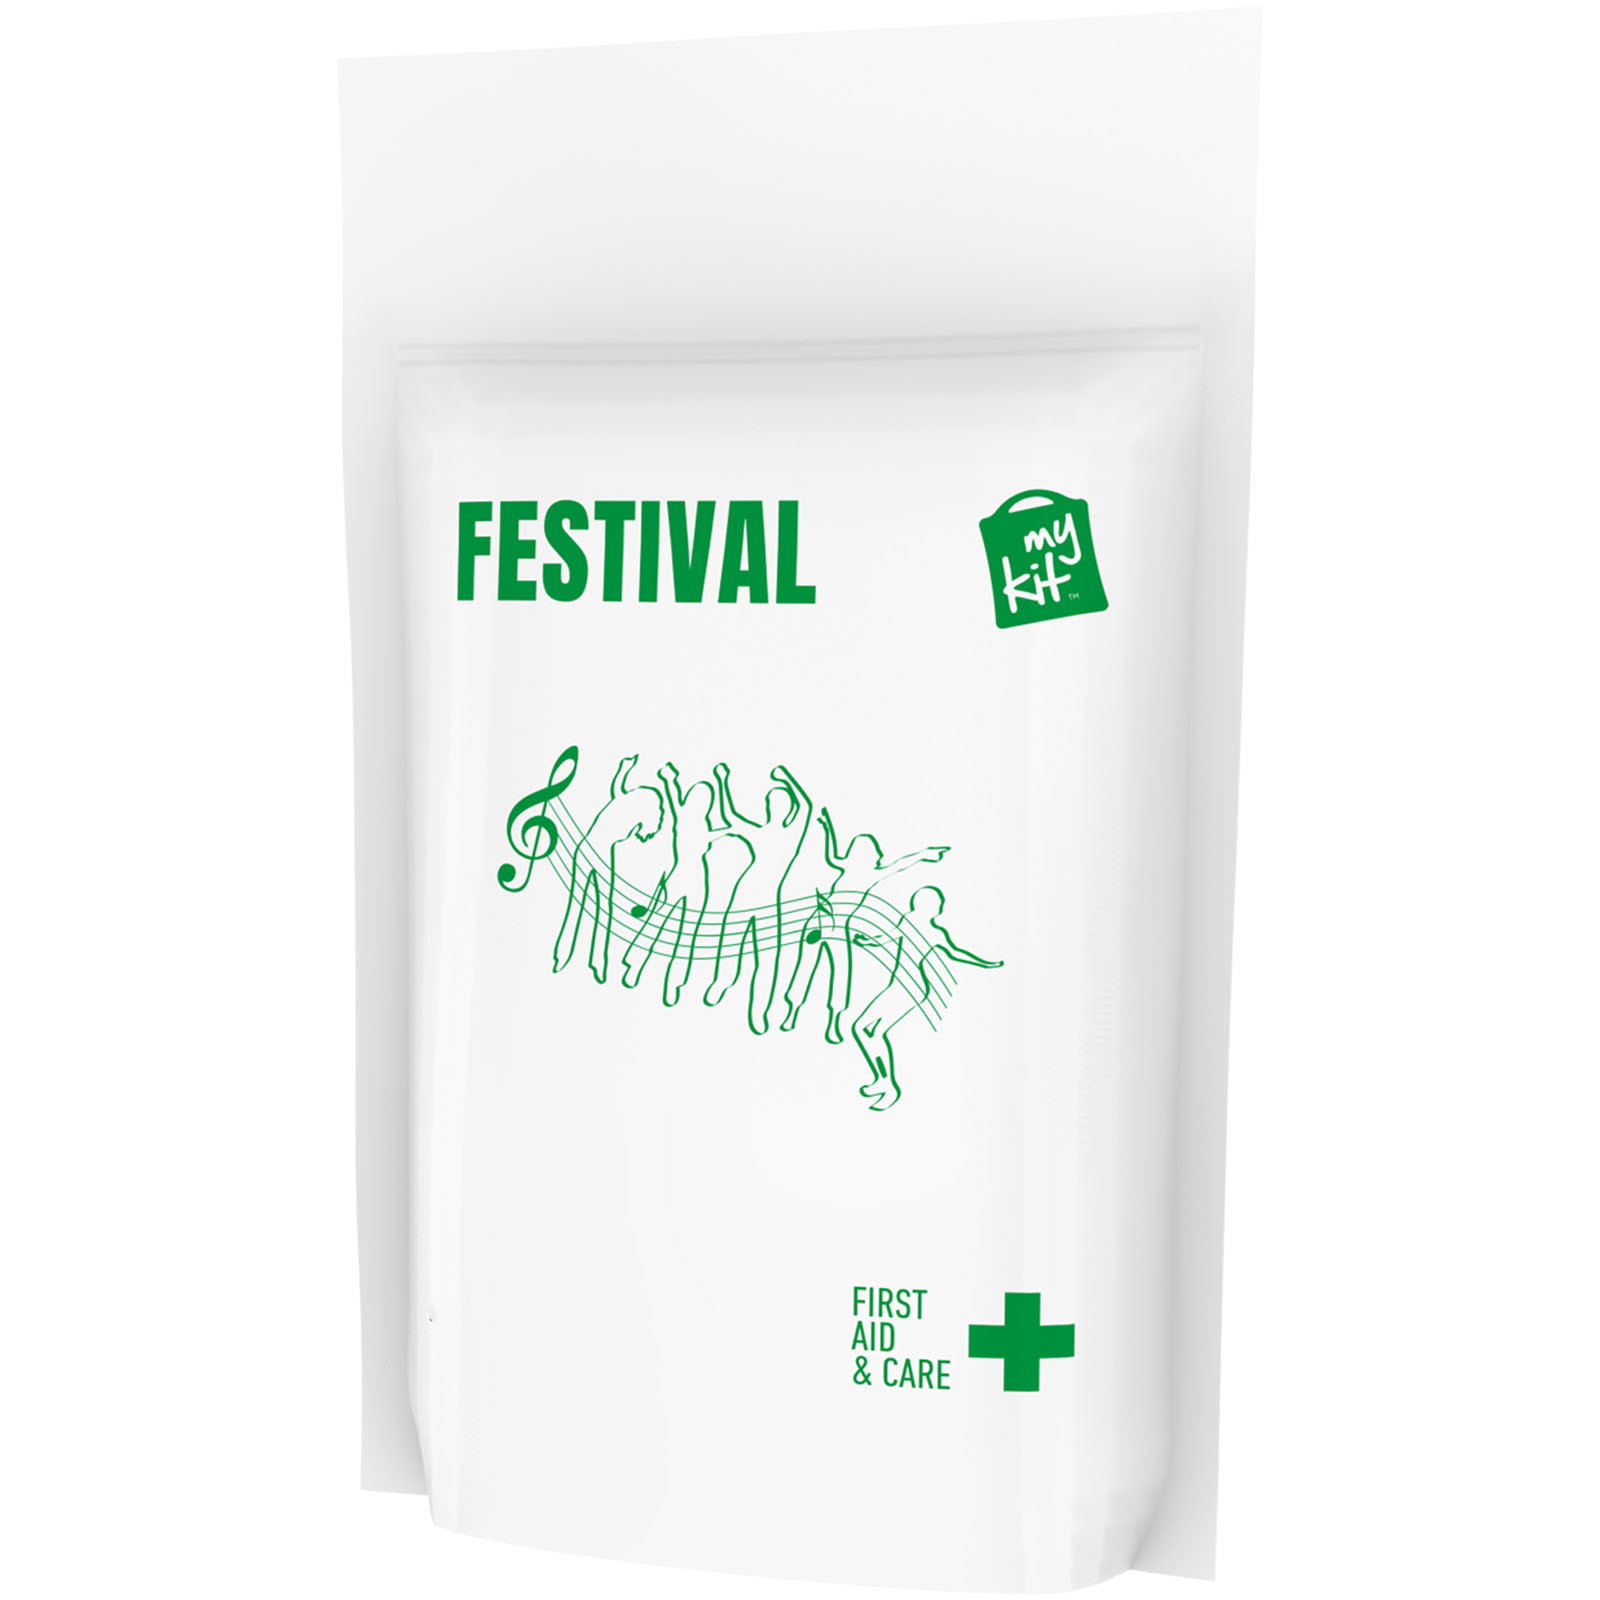 MiniKit Set Festival con custodia in carta